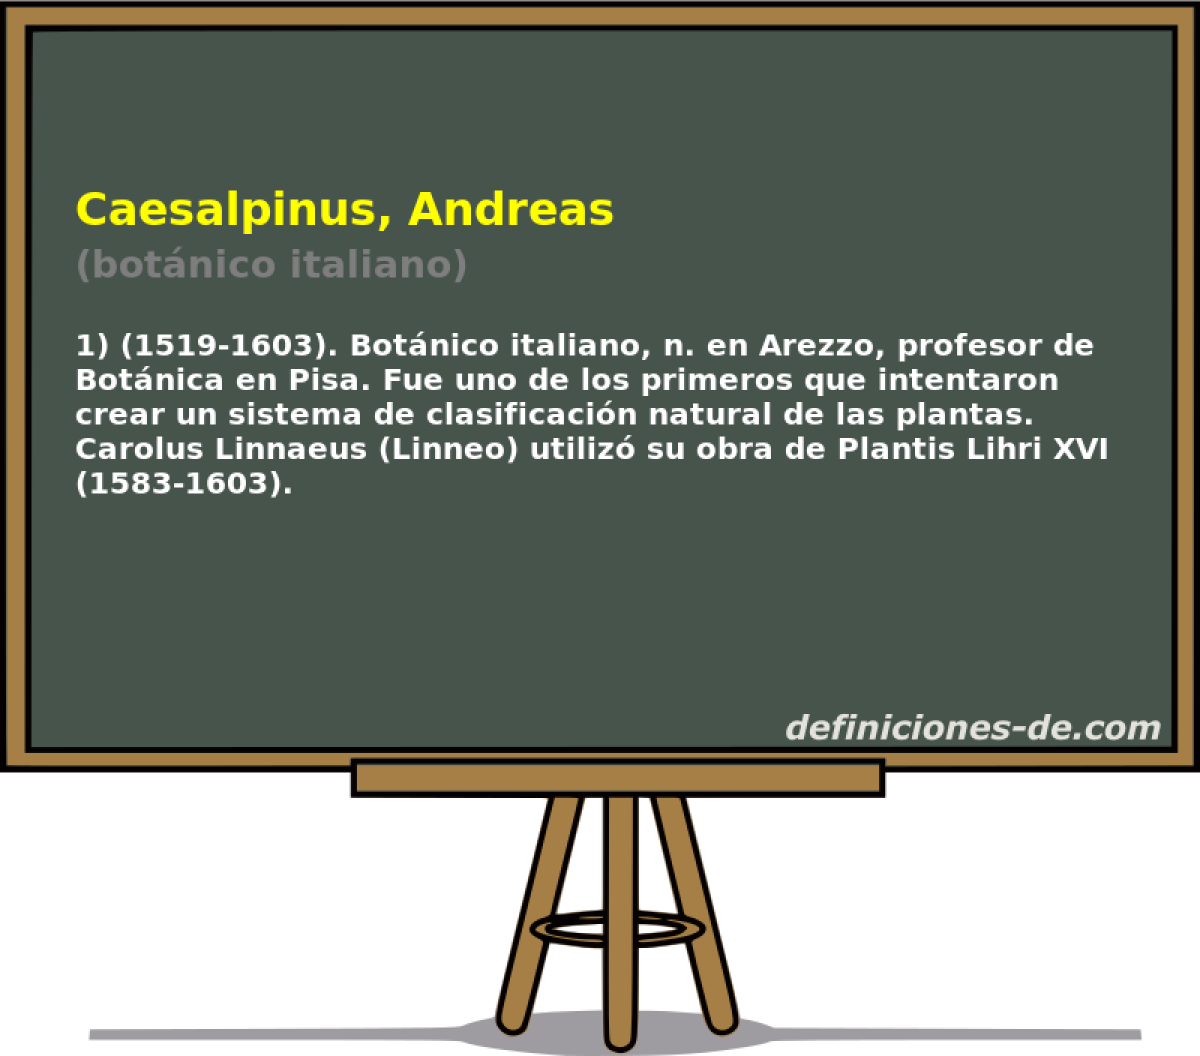 Caesalpinus, Andreas (botnico italiano)